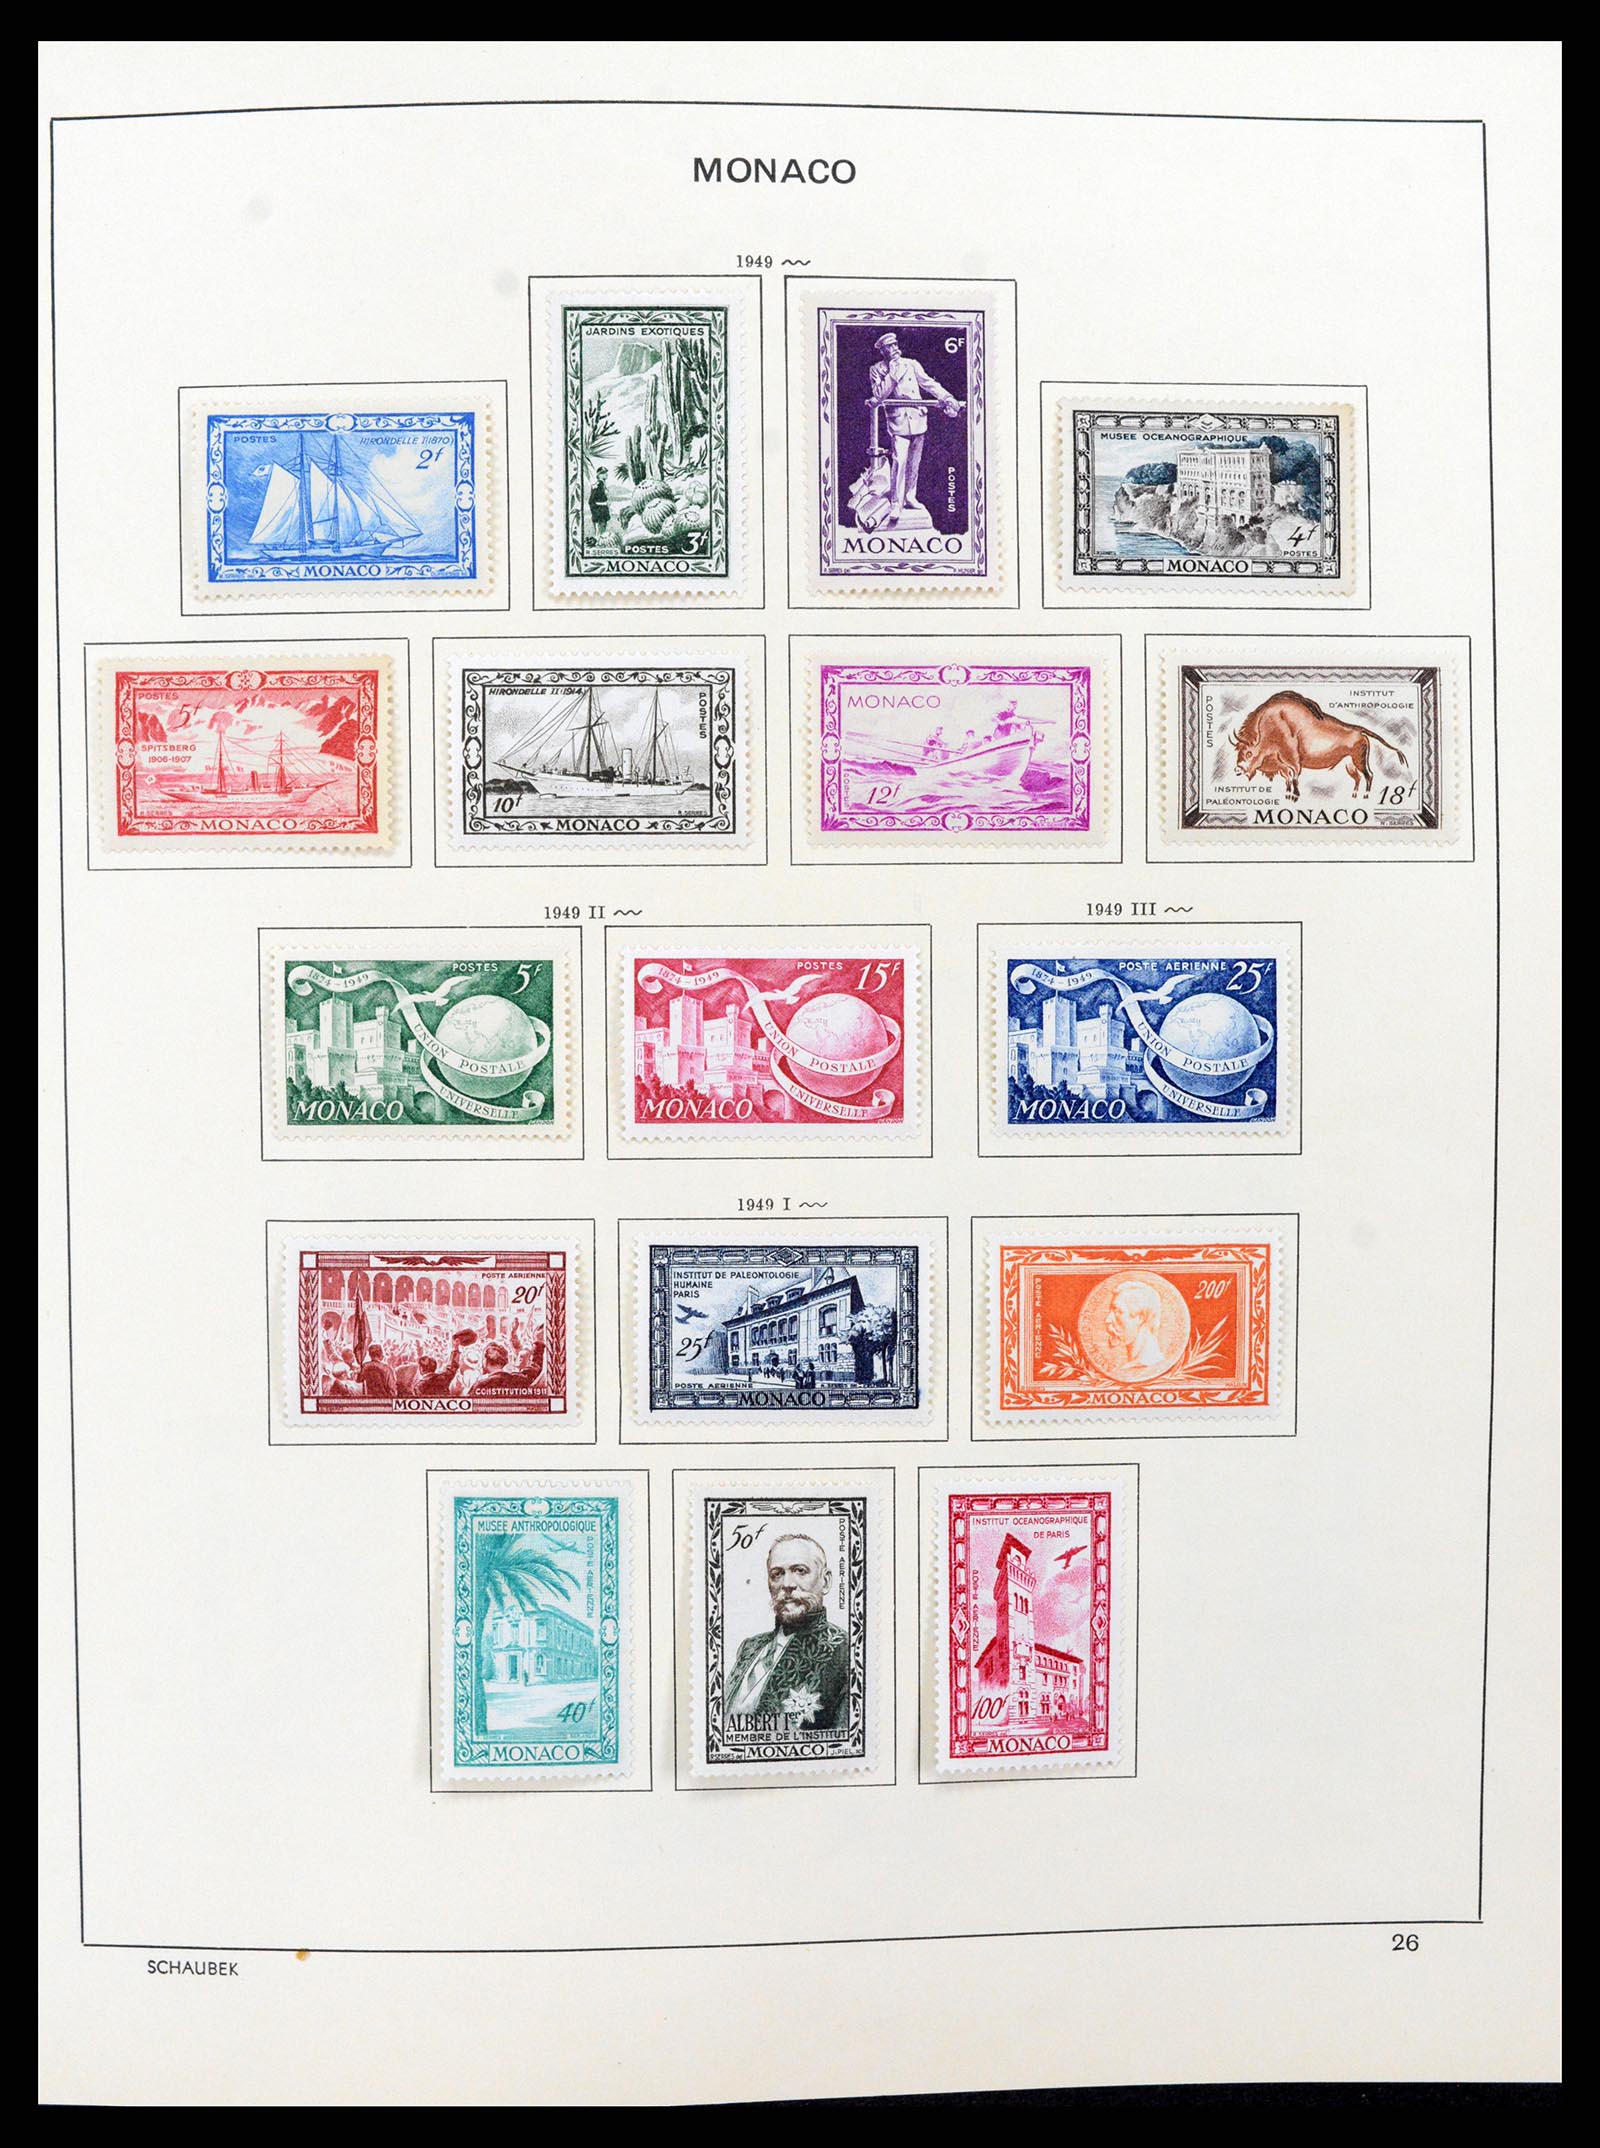 37570 027 - Stamp collection 37570 Monaco 1885-2013.